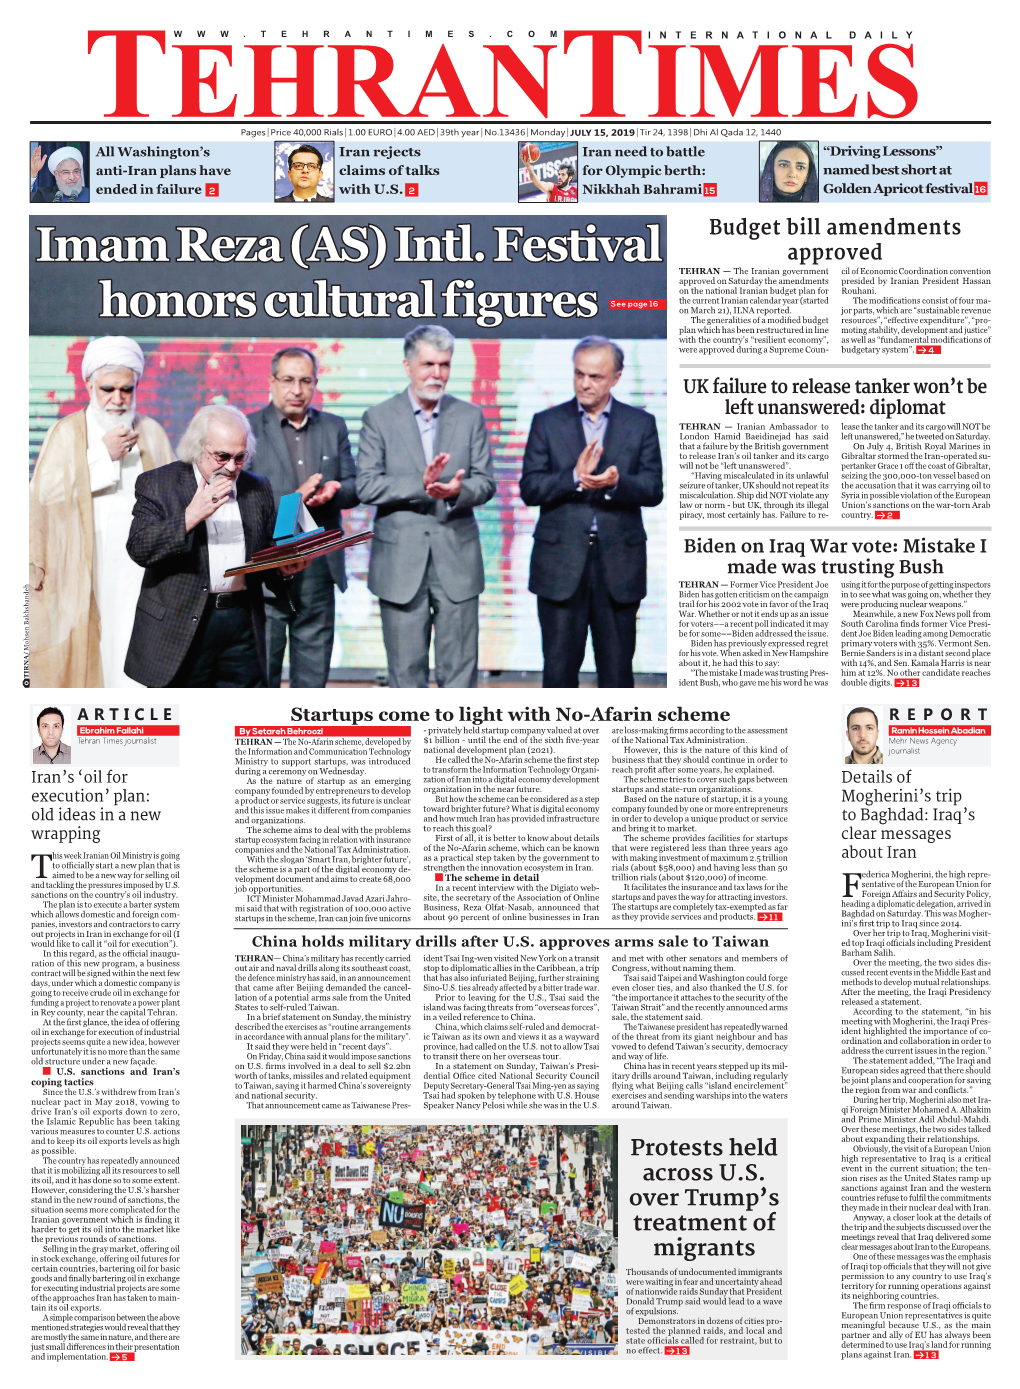 Imam Reza (AS) Intl. Festival Honors Cultural Figures